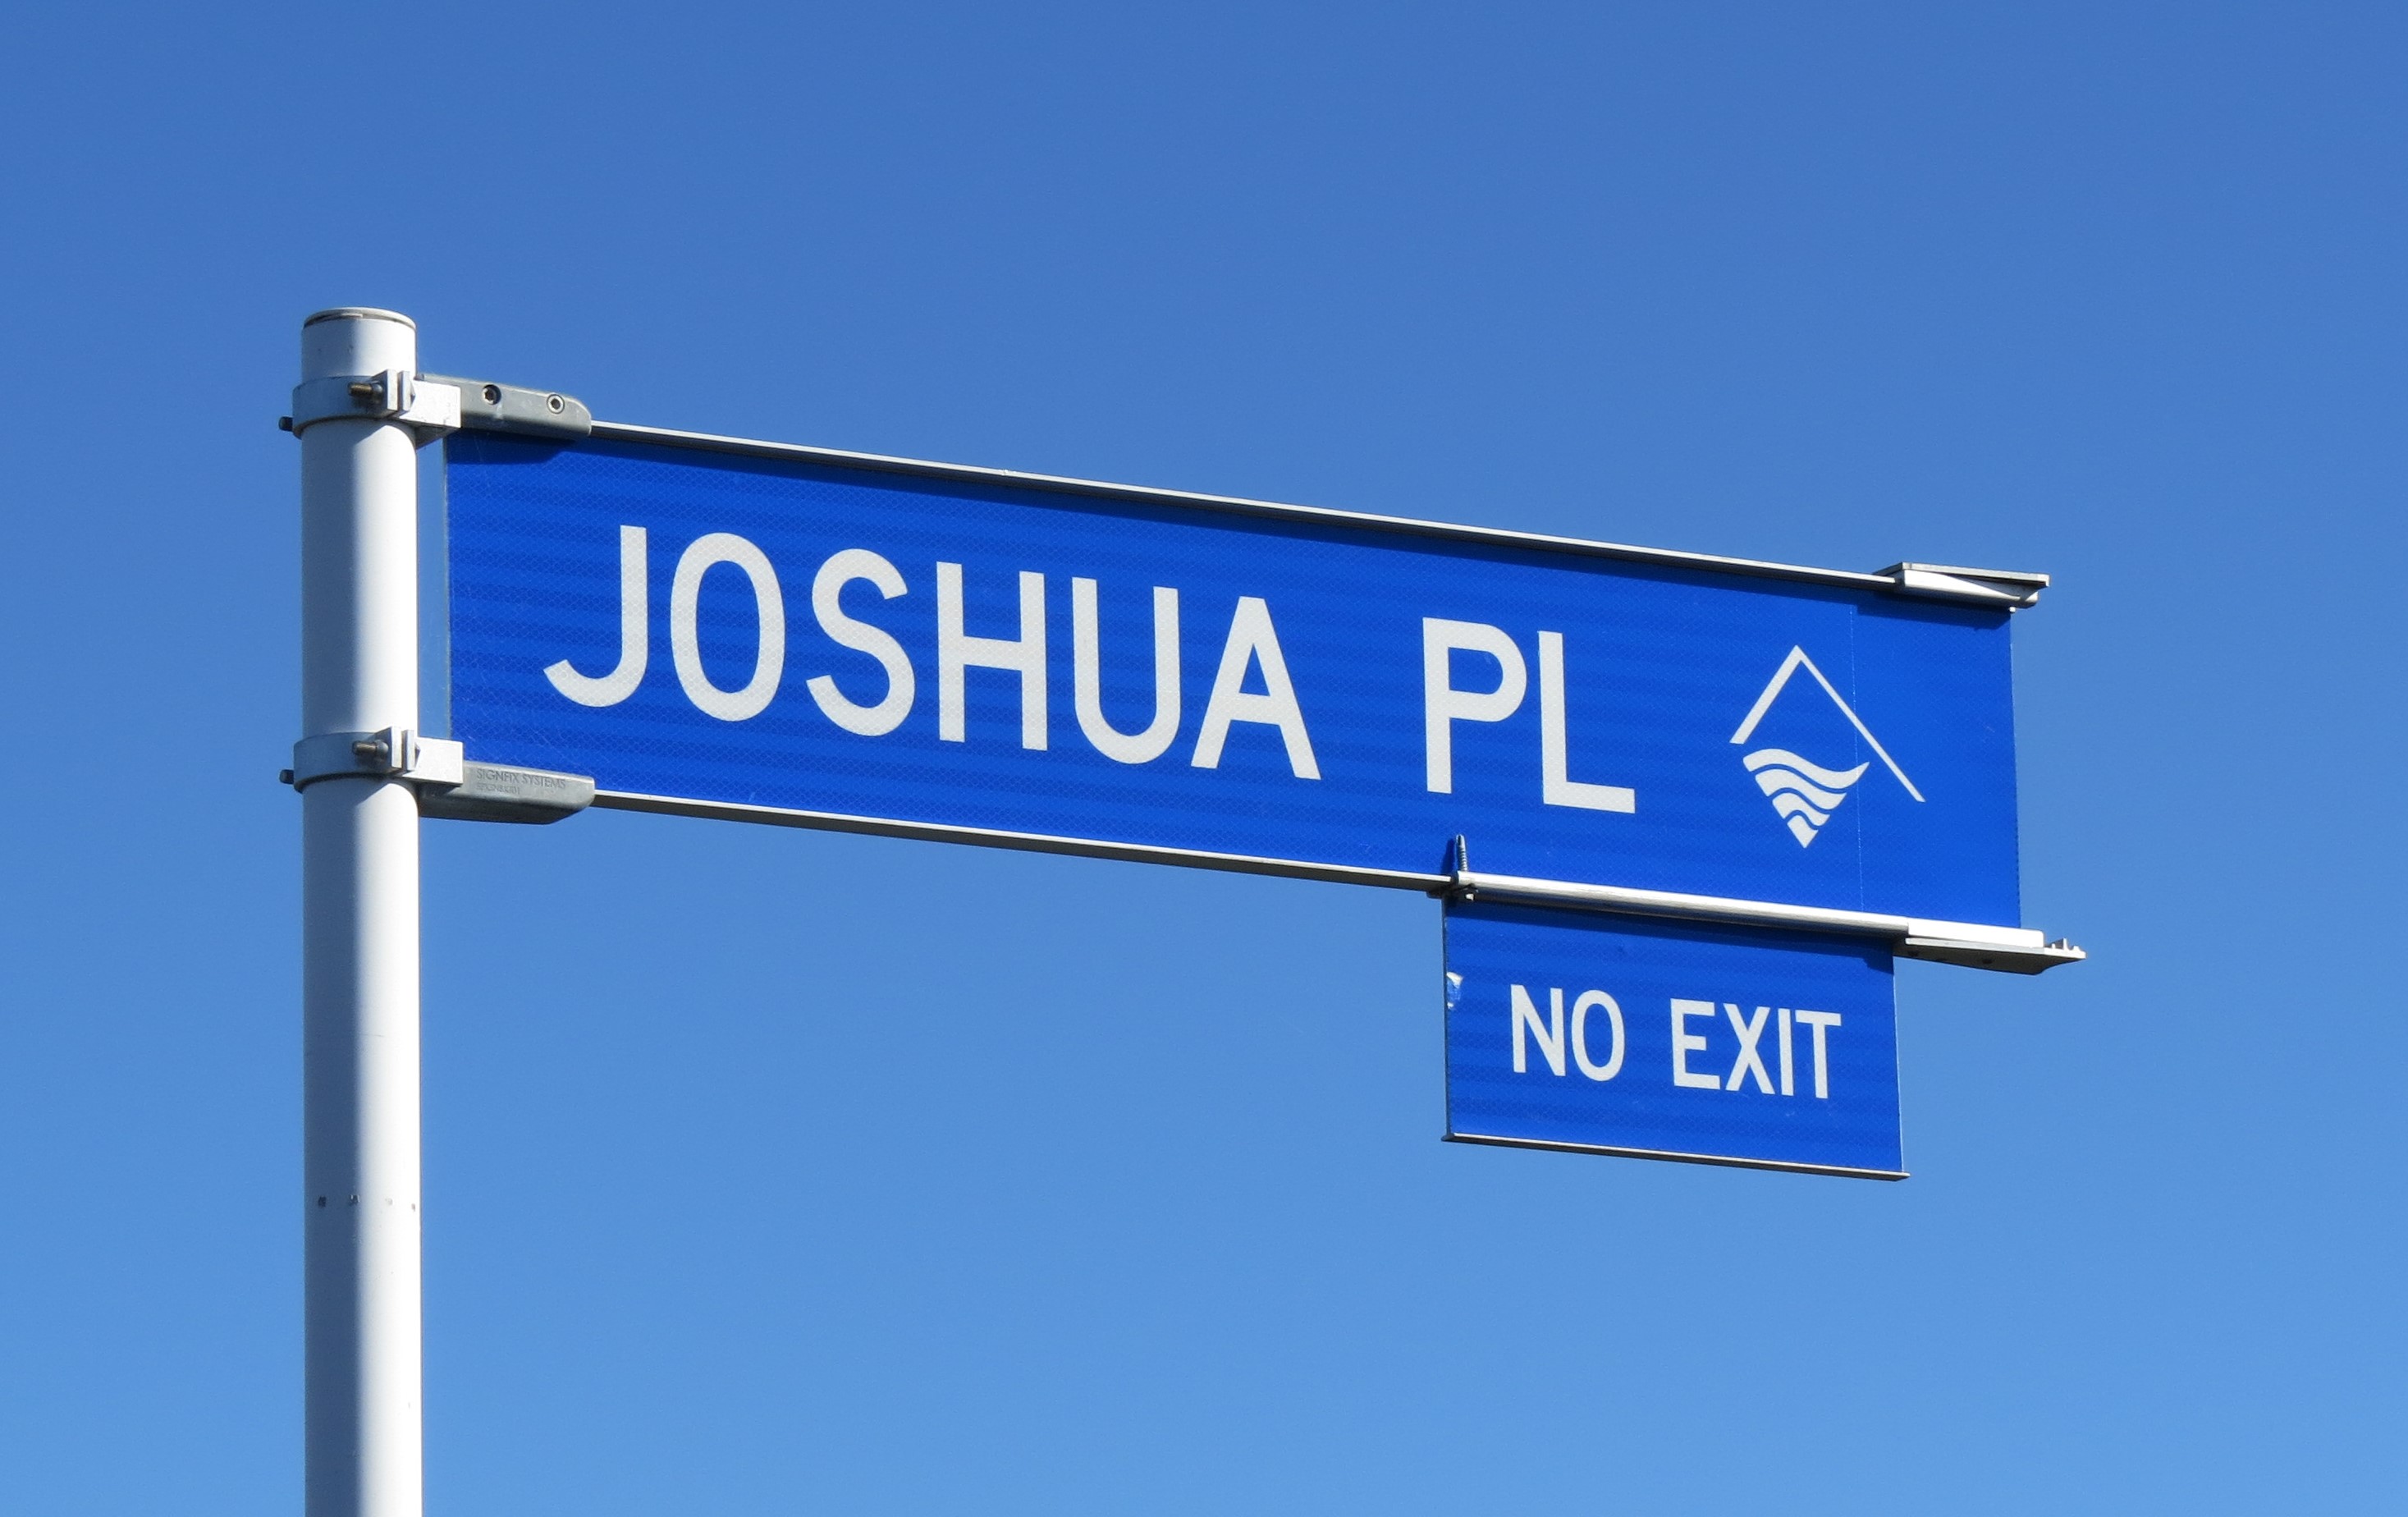 Joshua Place.JPG